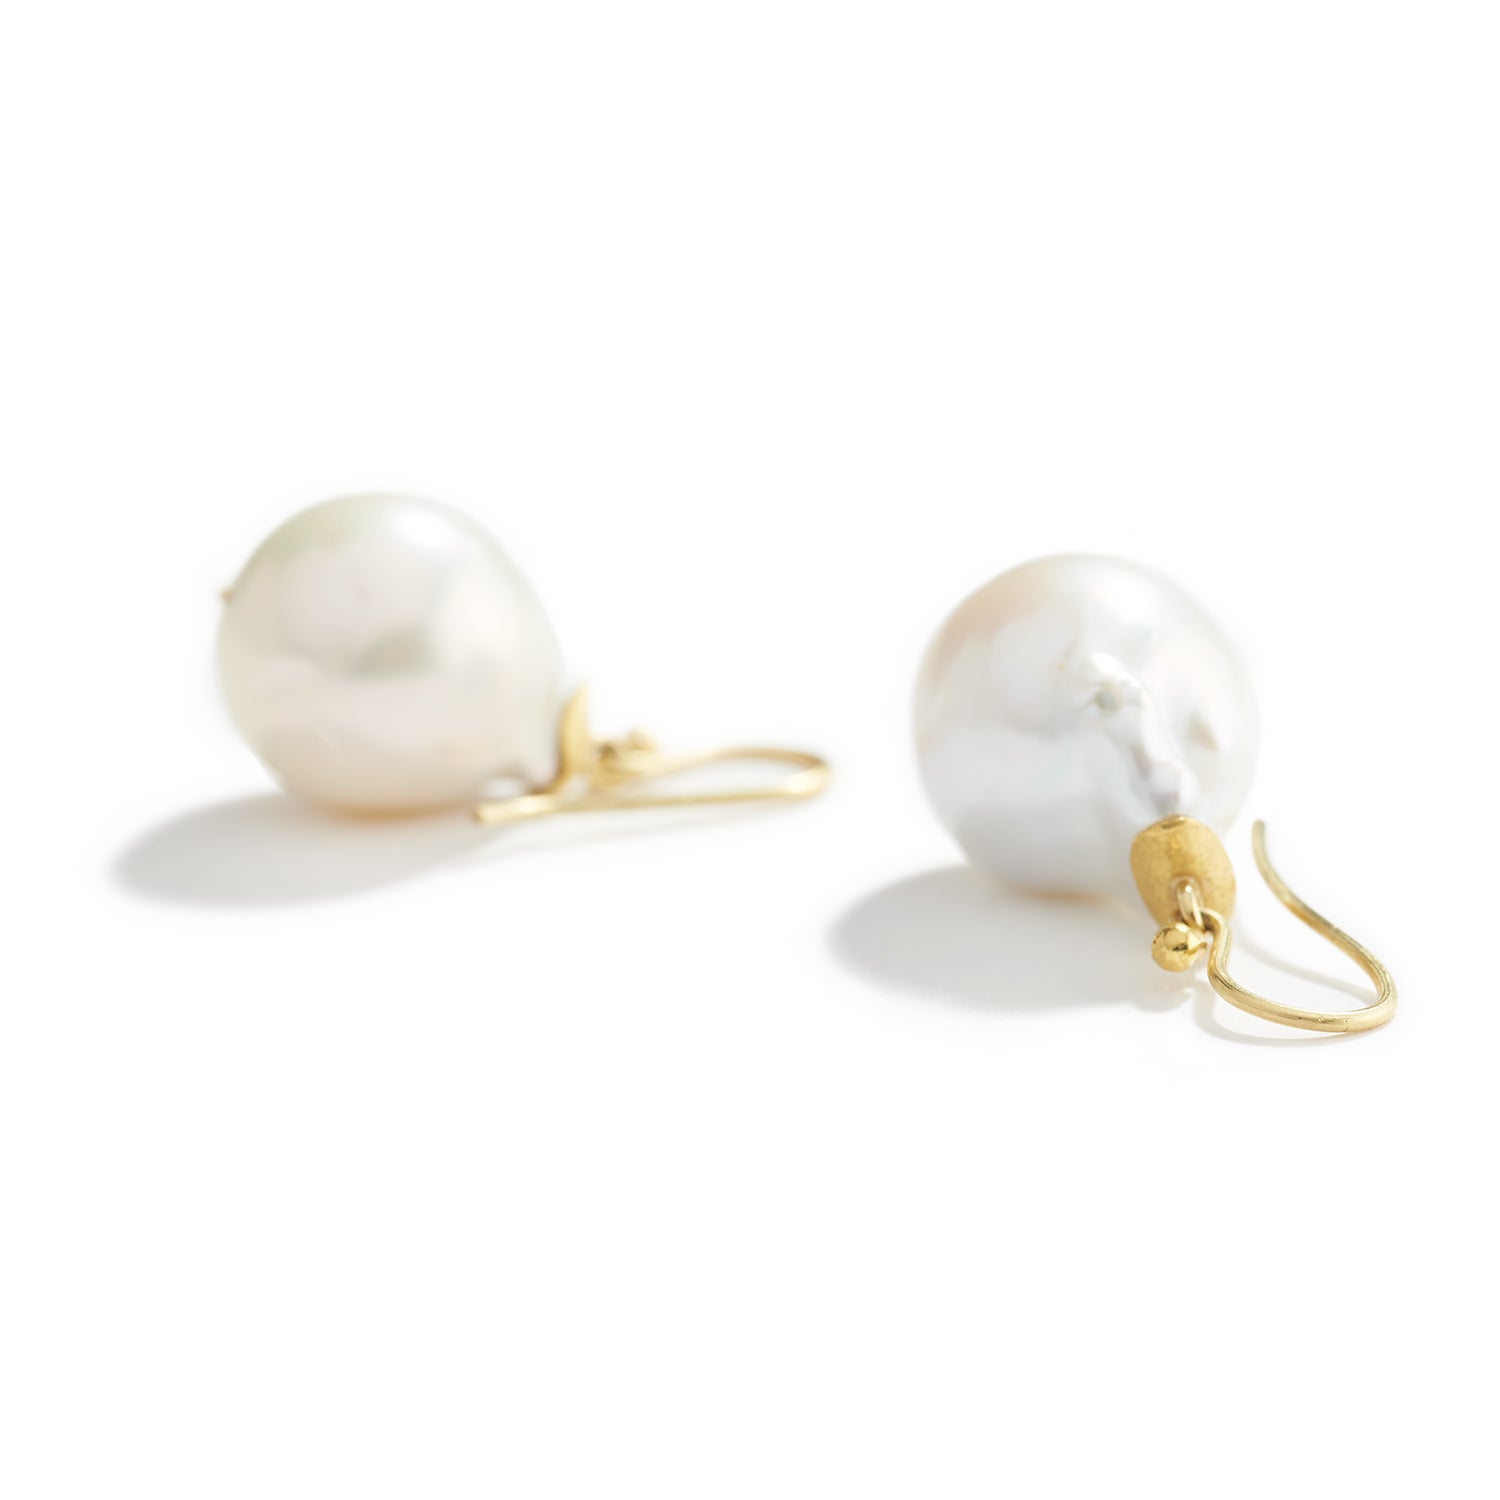 Small White Baroque Pearl Earrings